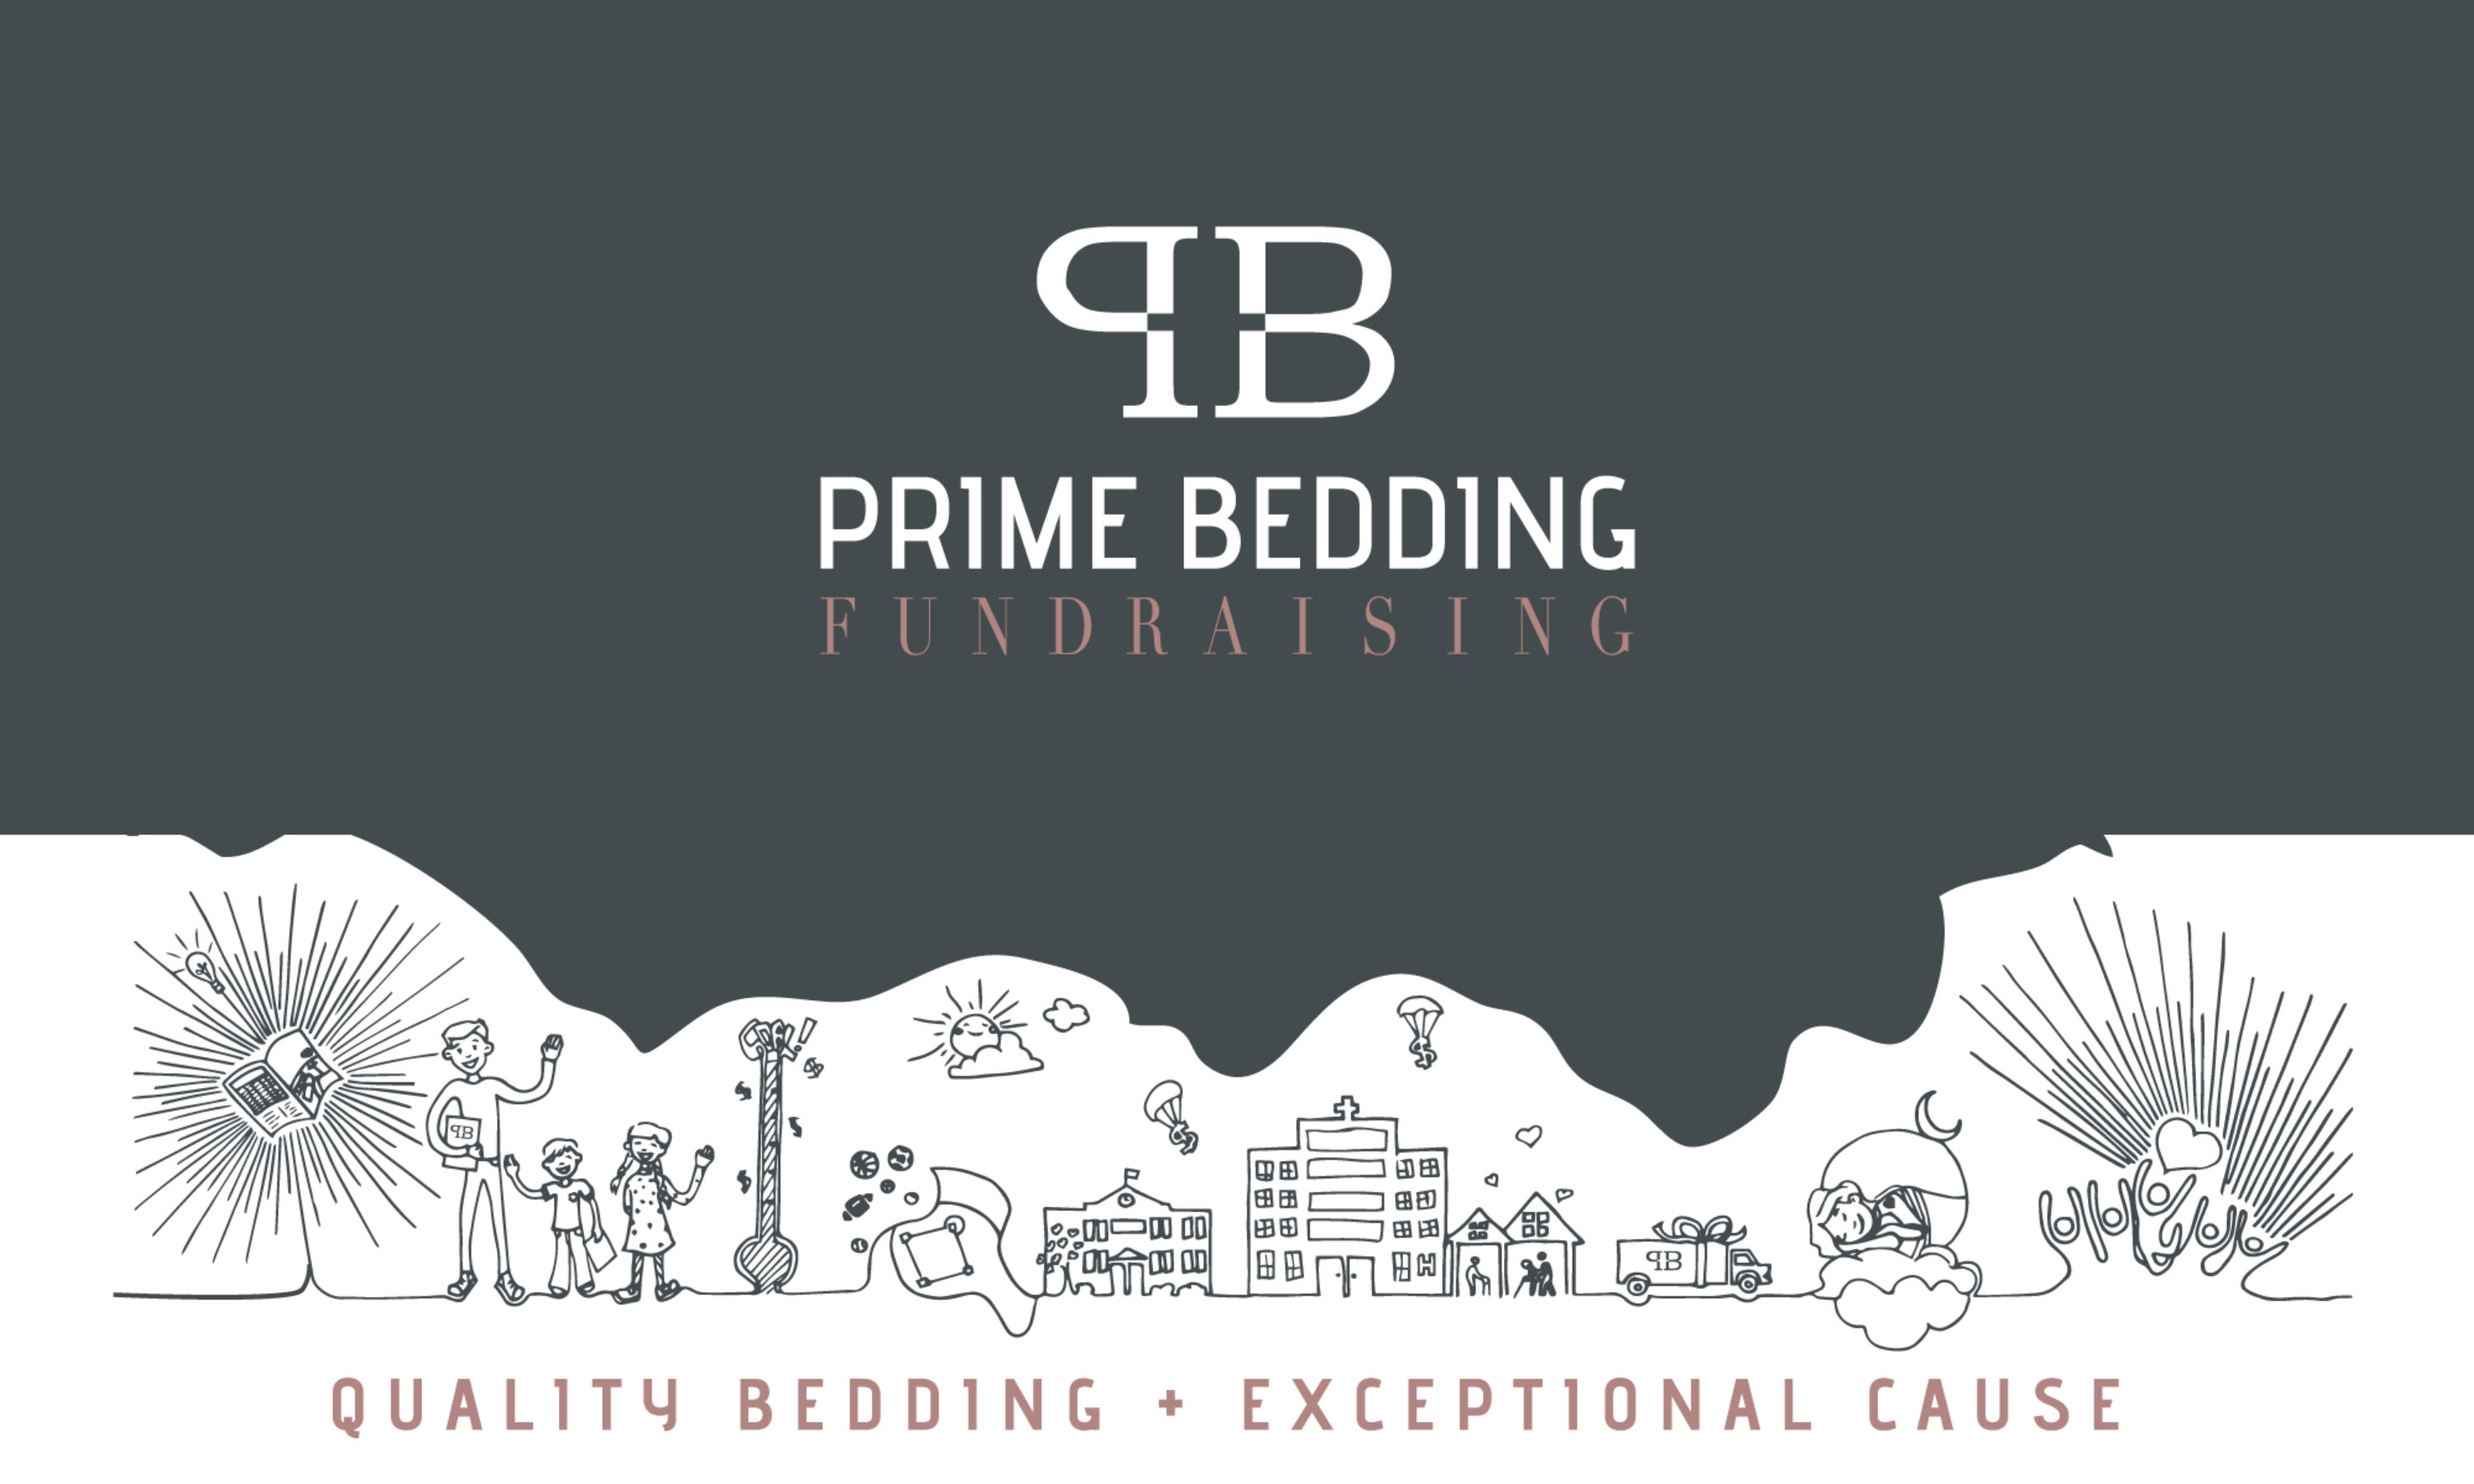 Prime Bedding Fundraising